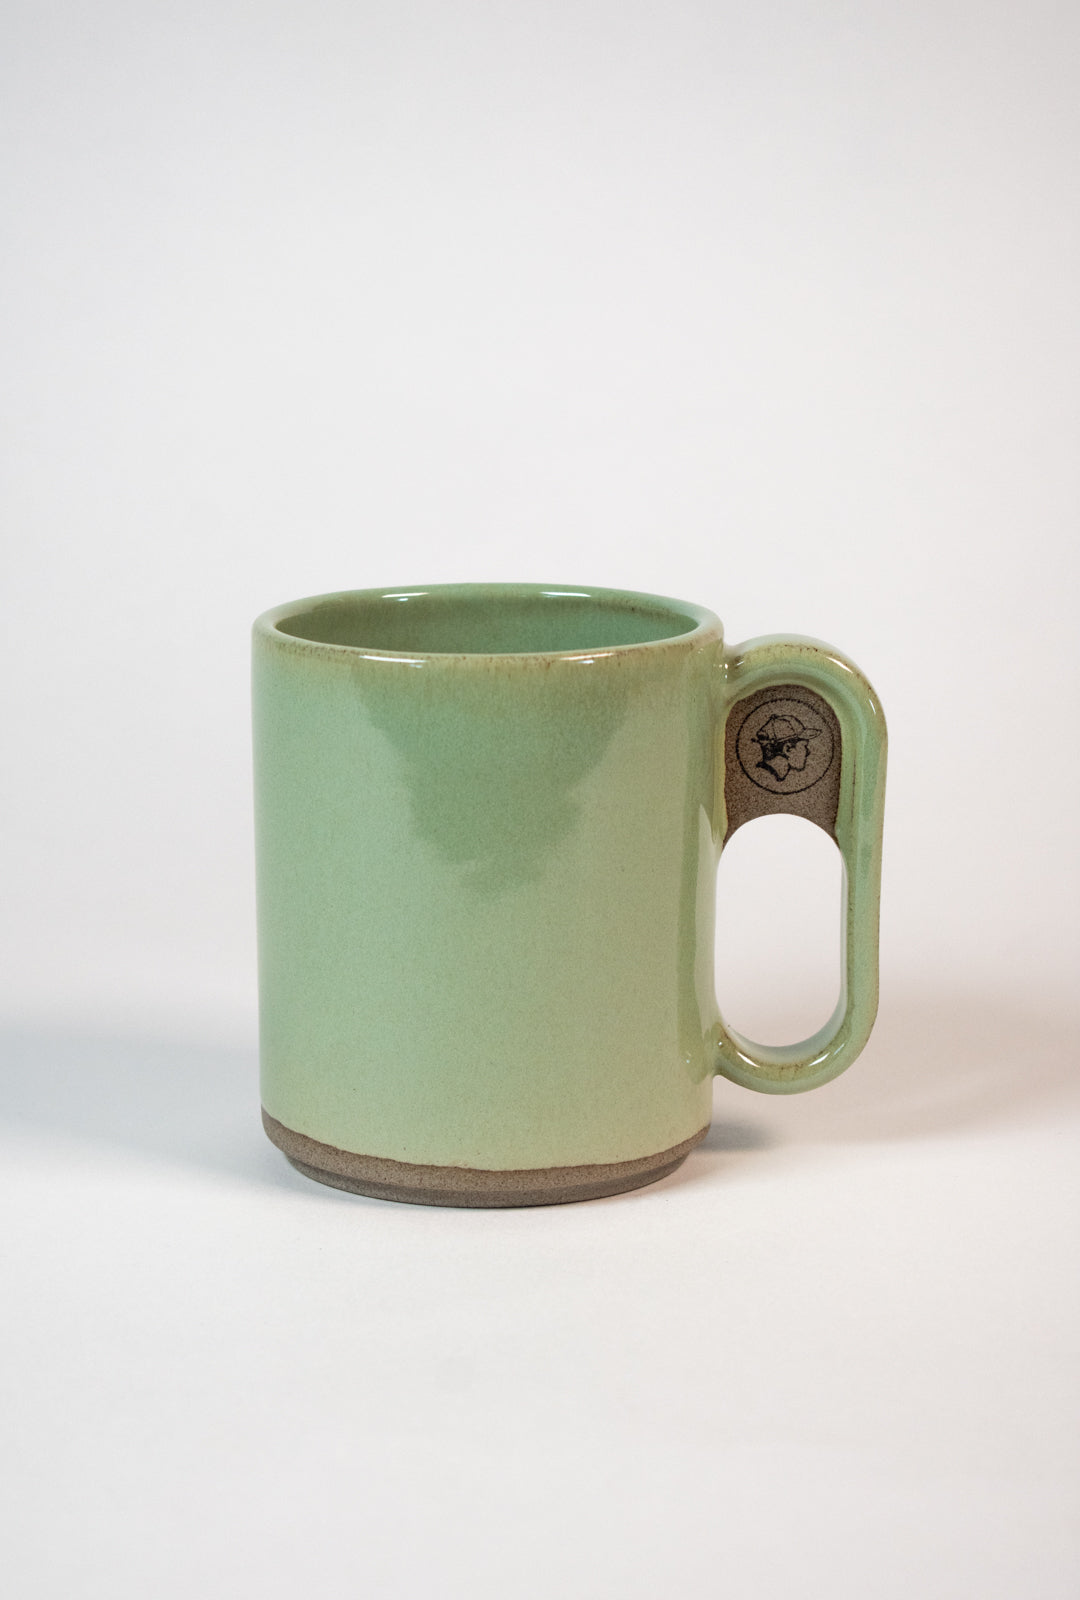 'Pasture' Mug -  Small